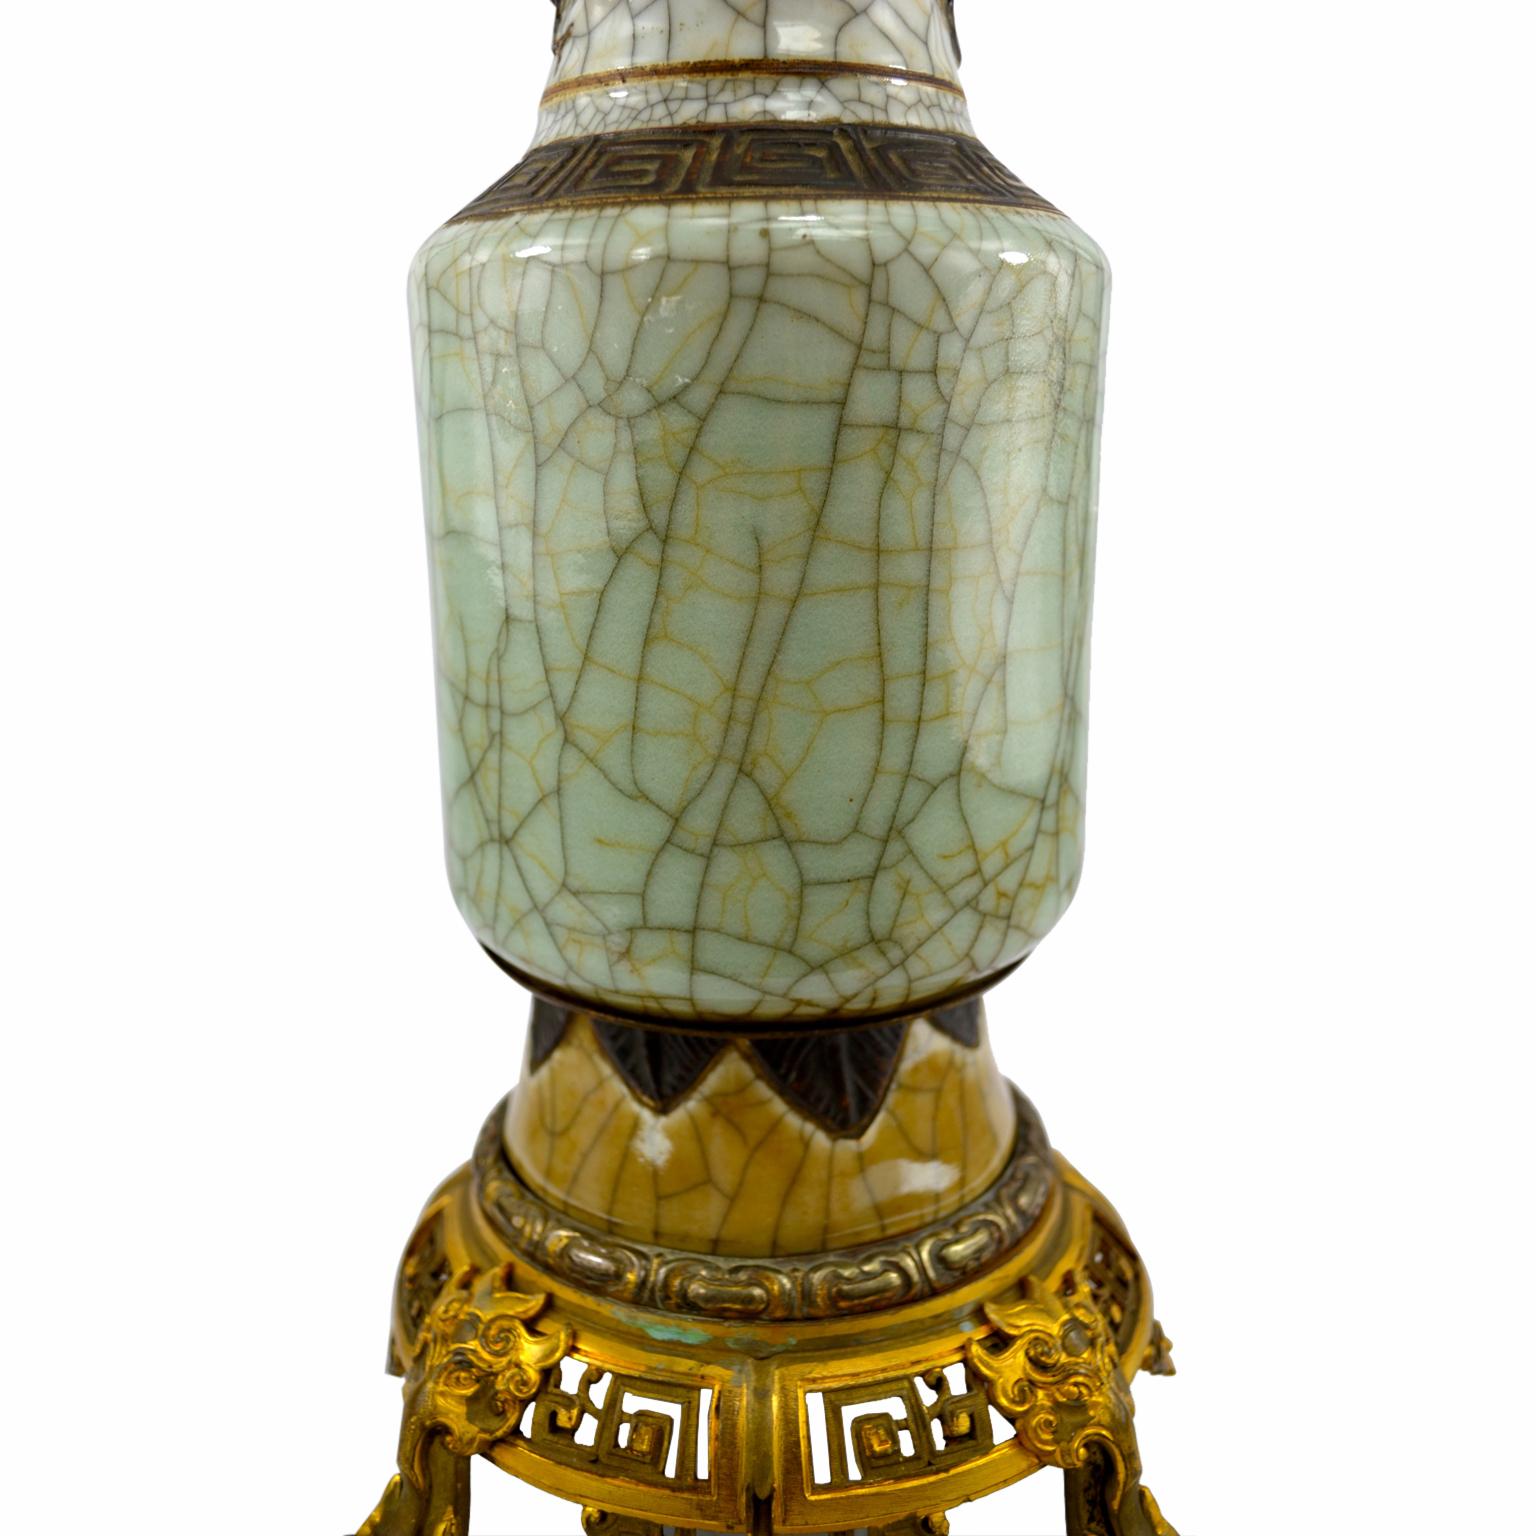 Other Chinese Nanking Period Crackle Glaze Celadon porcelain Vase with Bronze Base